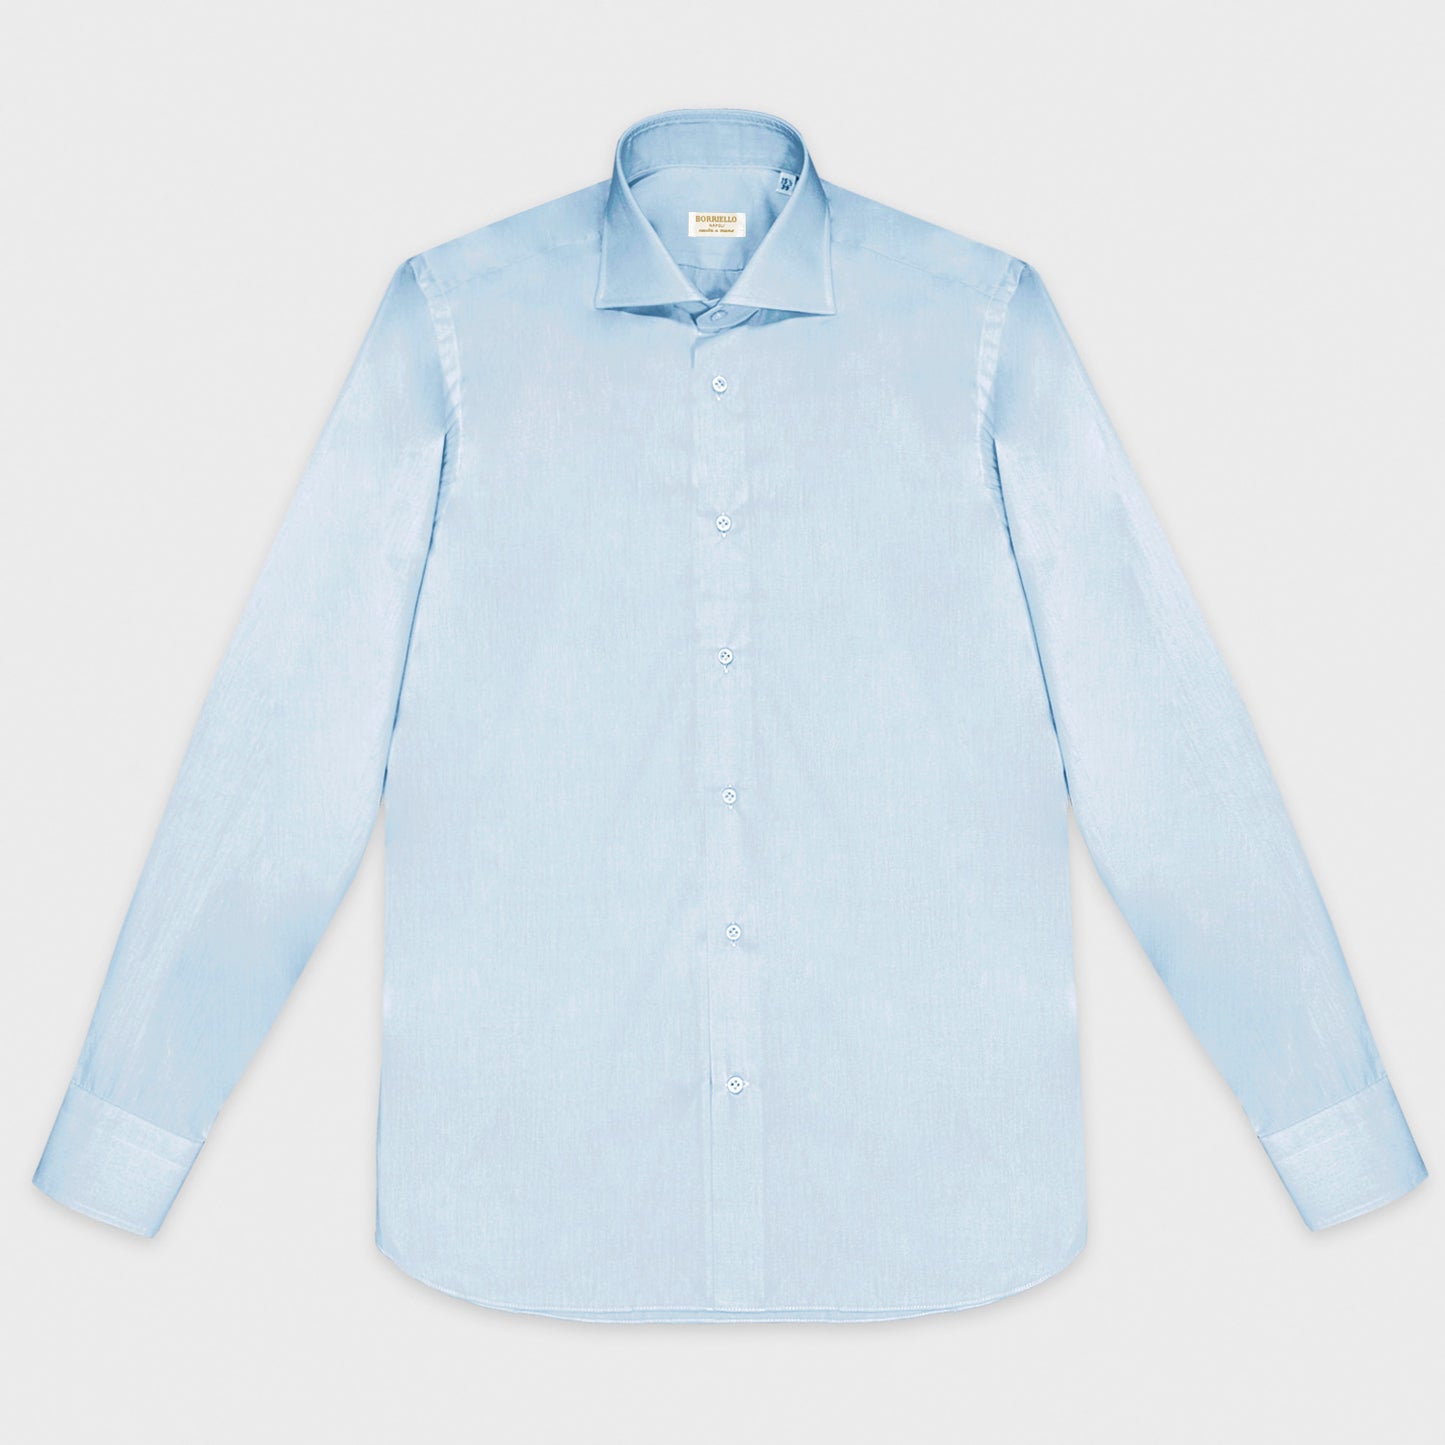 Light Blue Oxford Cotton Shirt Borriello Napoli.